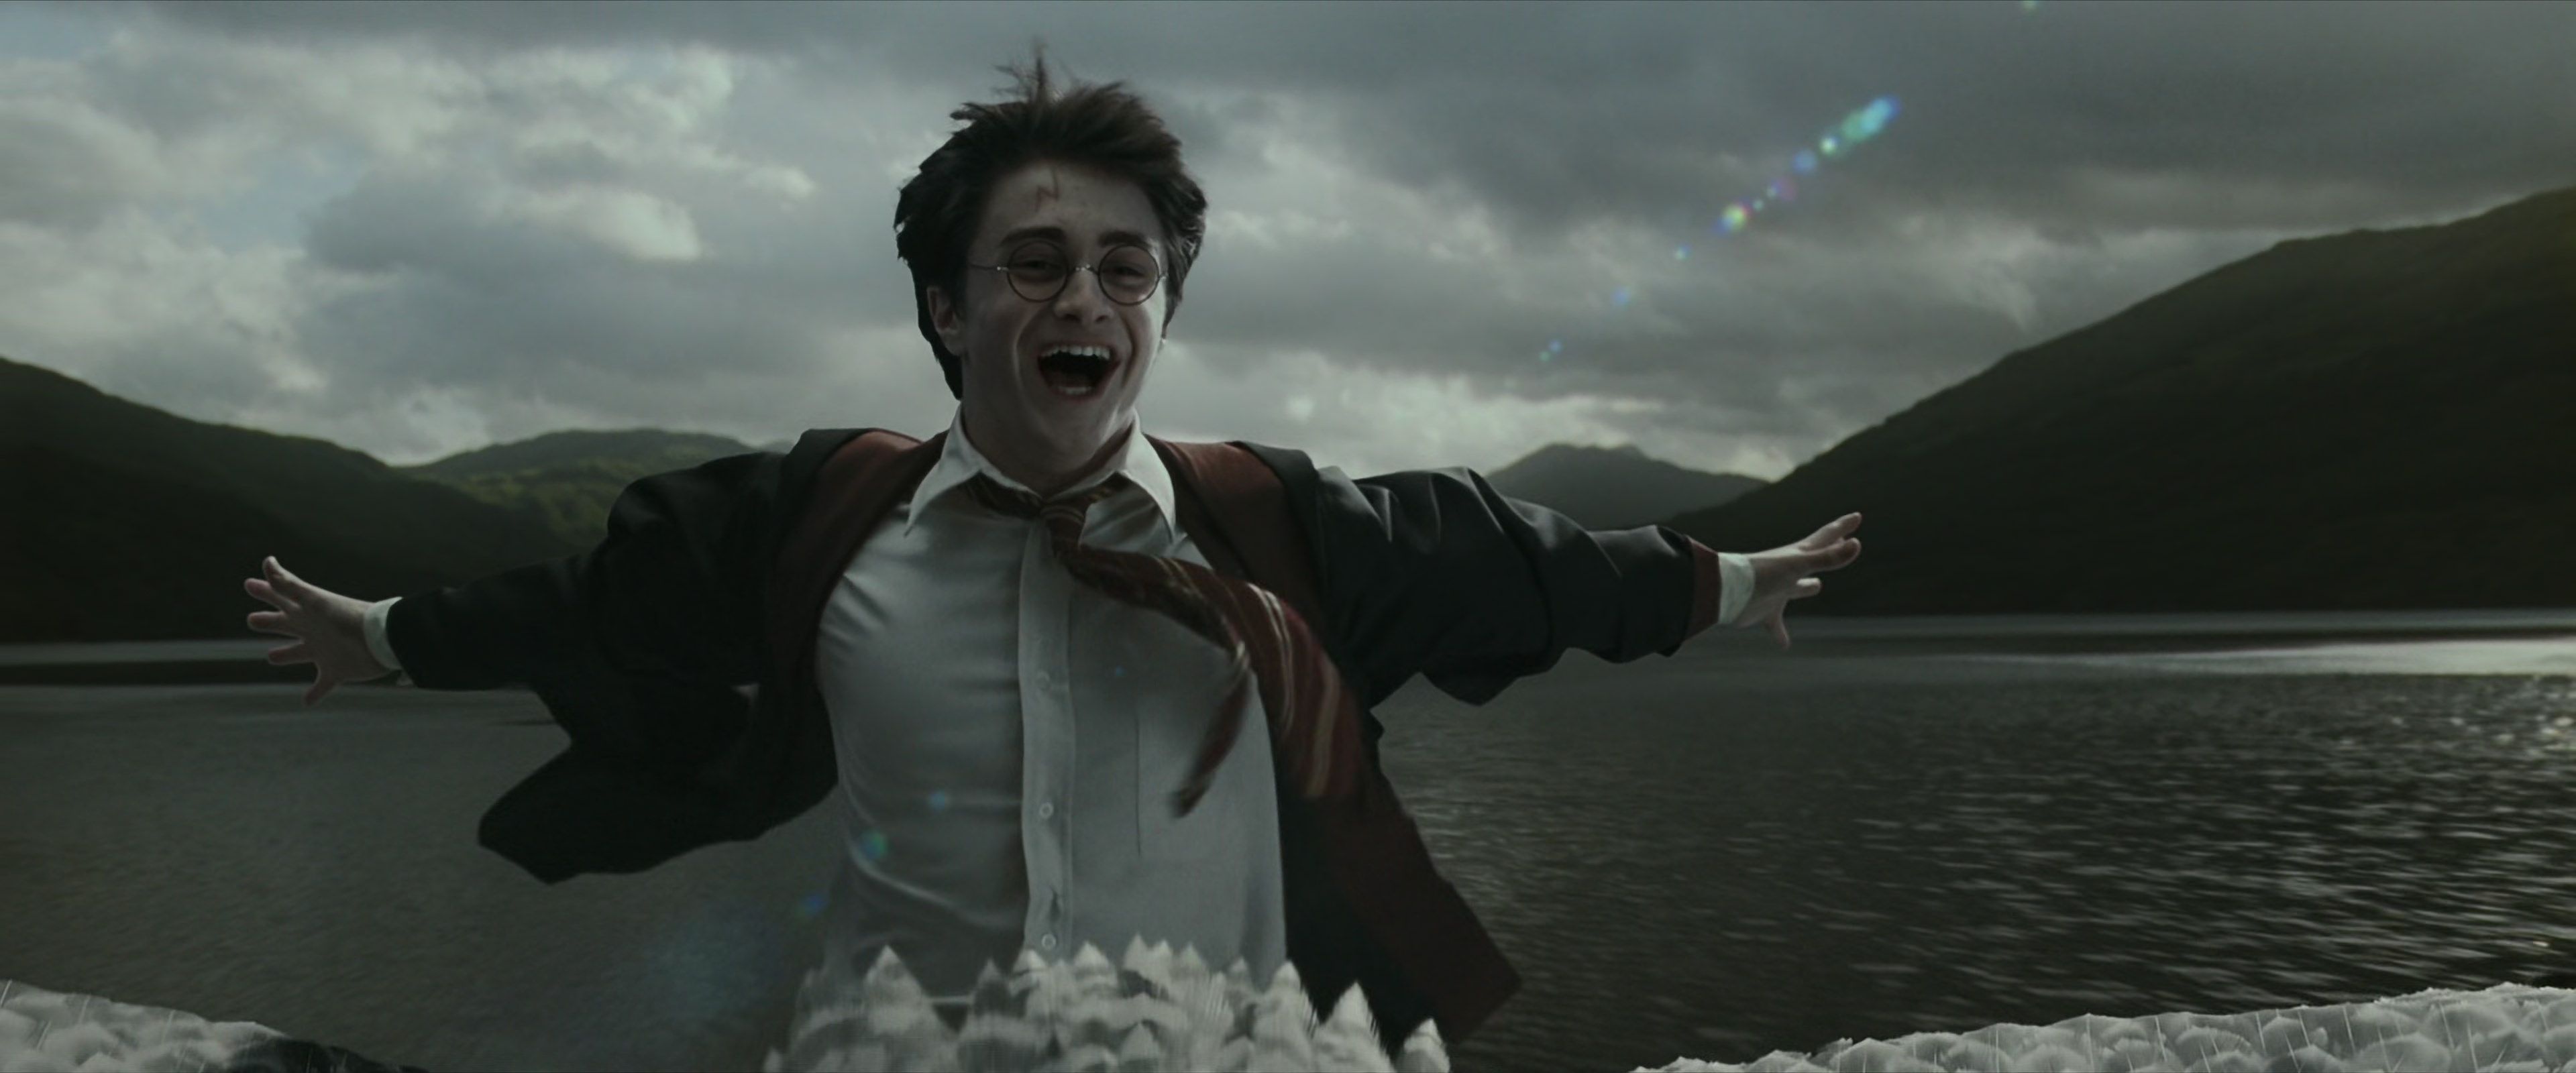 Prisoner of Azkaban, 4K movie, Harry James Potter, Films, 3840x1600 Dual Screen Desktop